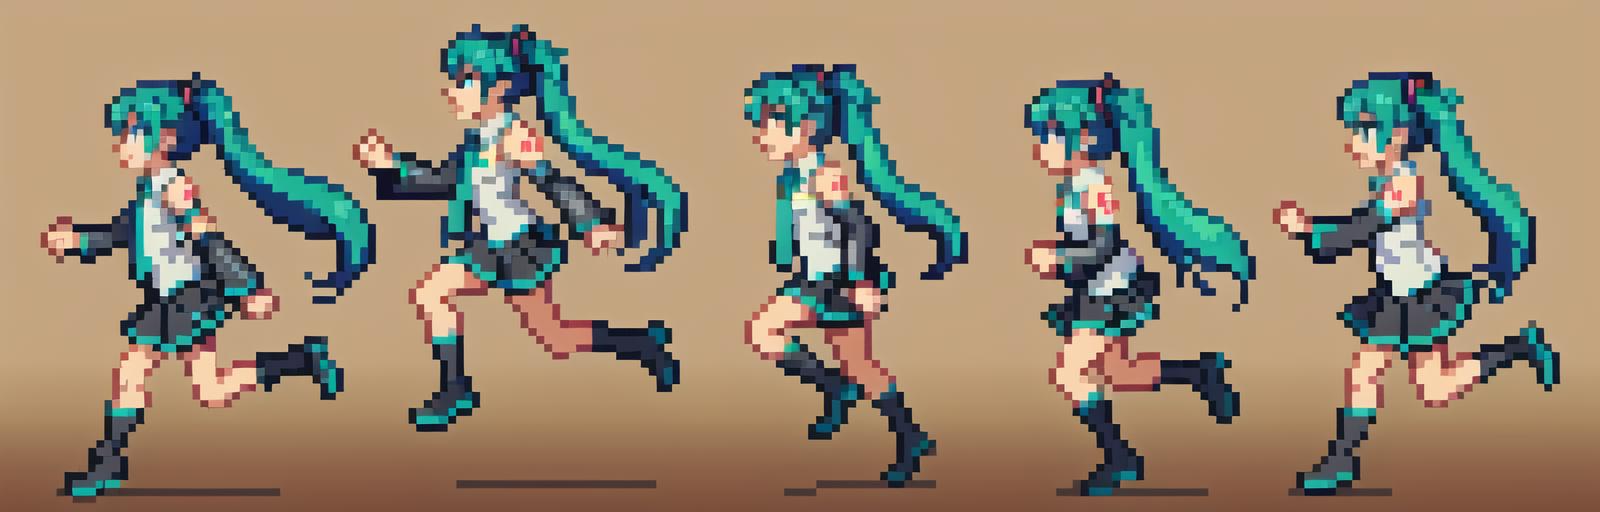 Three Pixel Art Characters Running in Unison